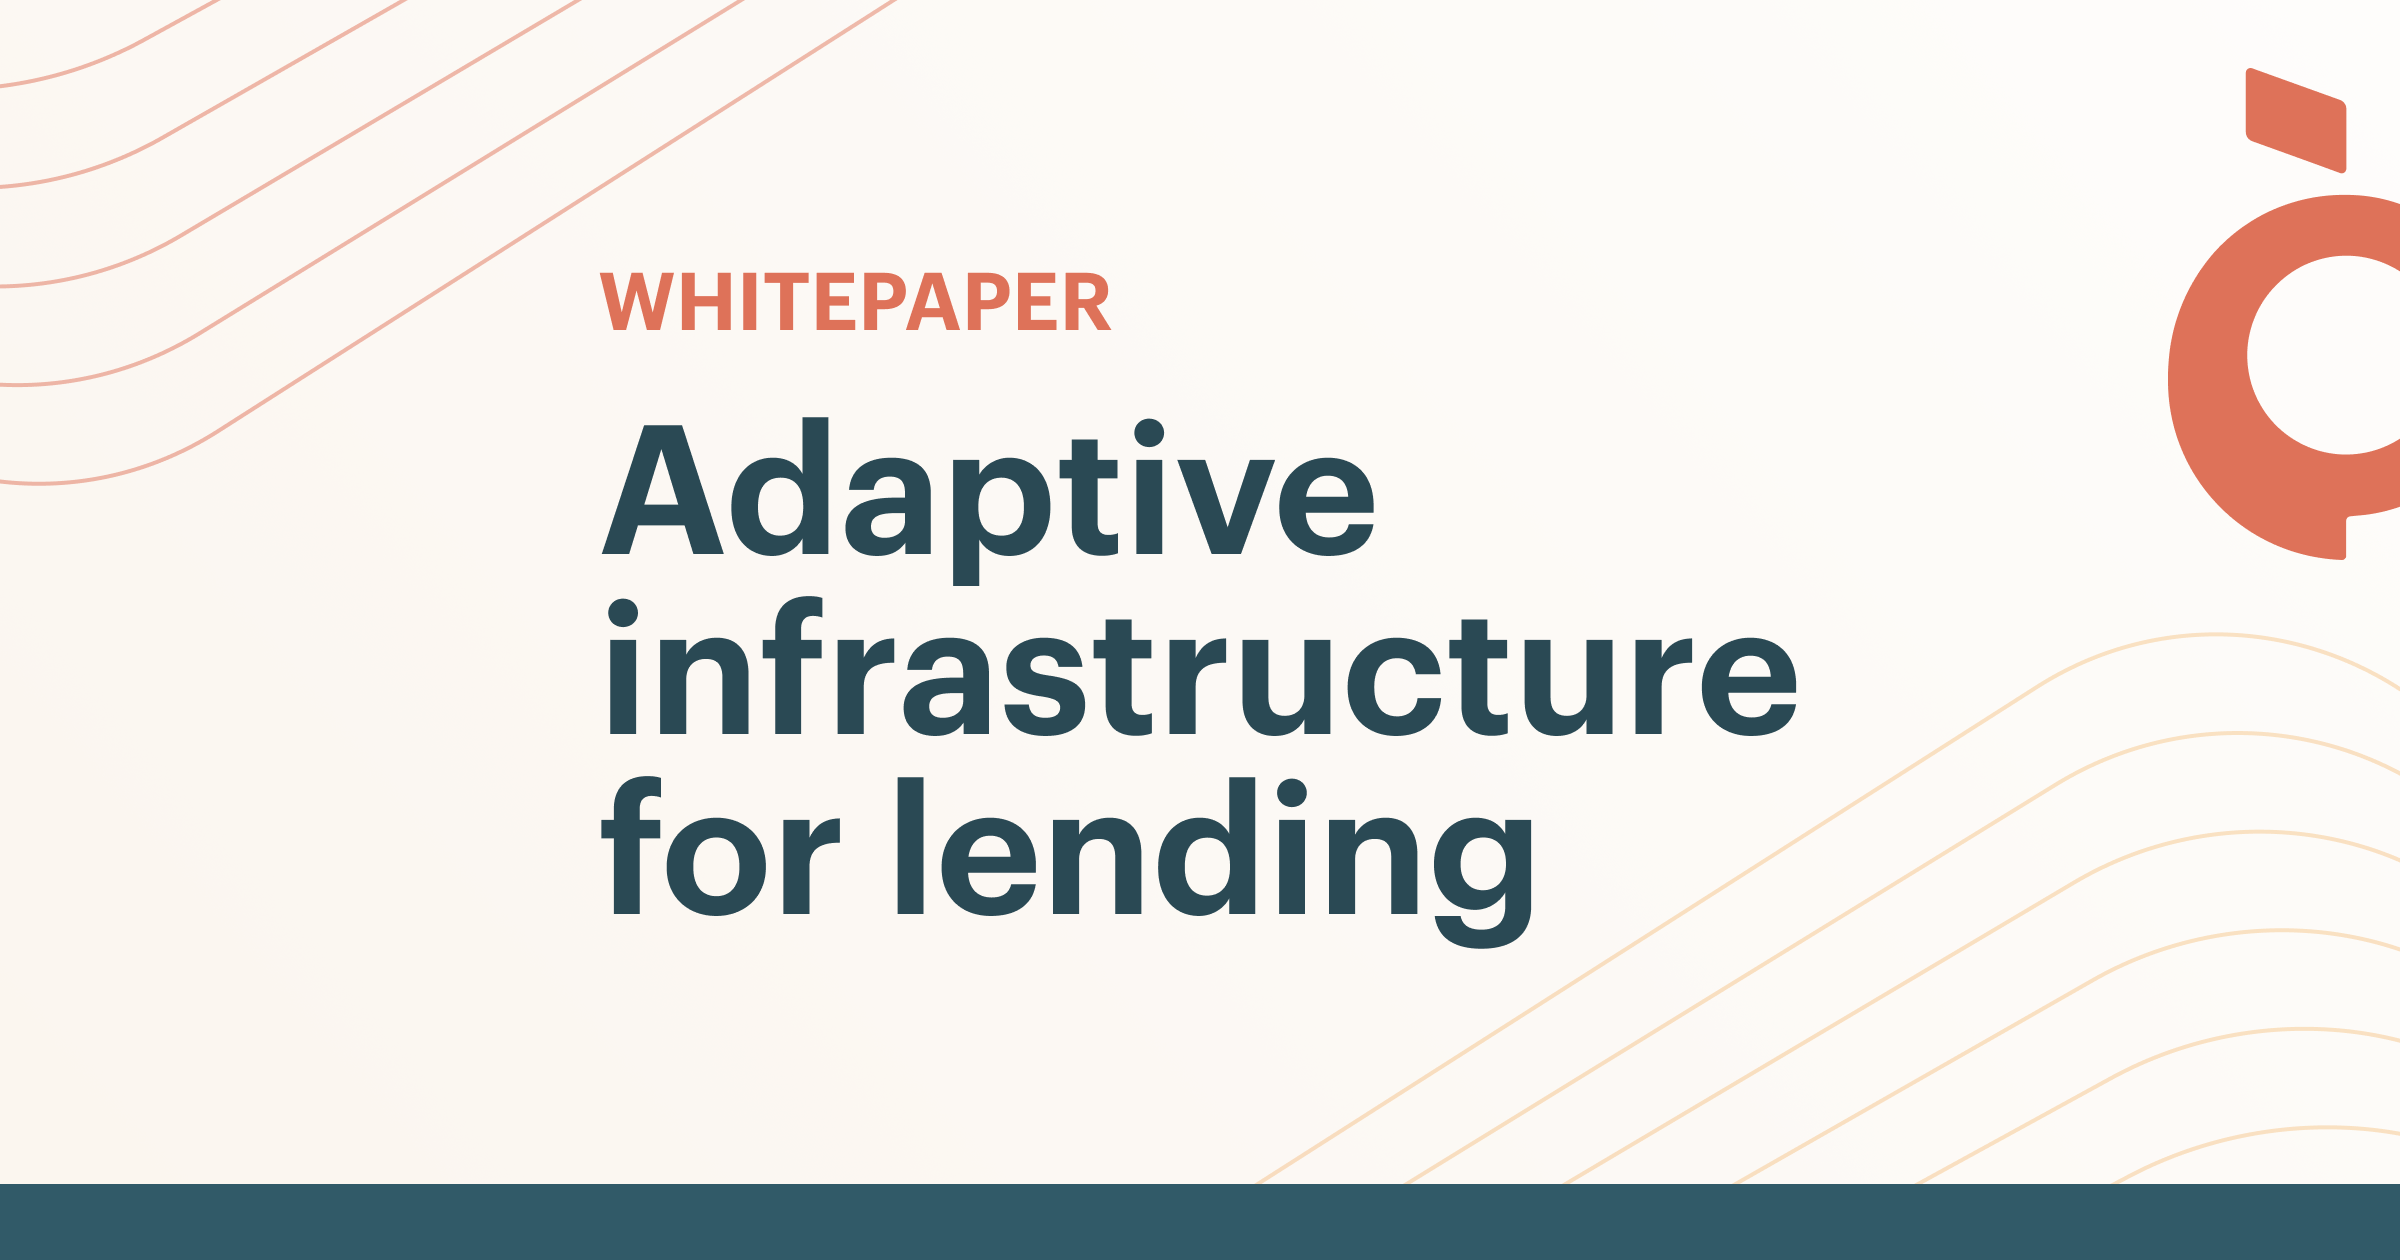 Peach's whitepaper on adaptive infrastructure for lending